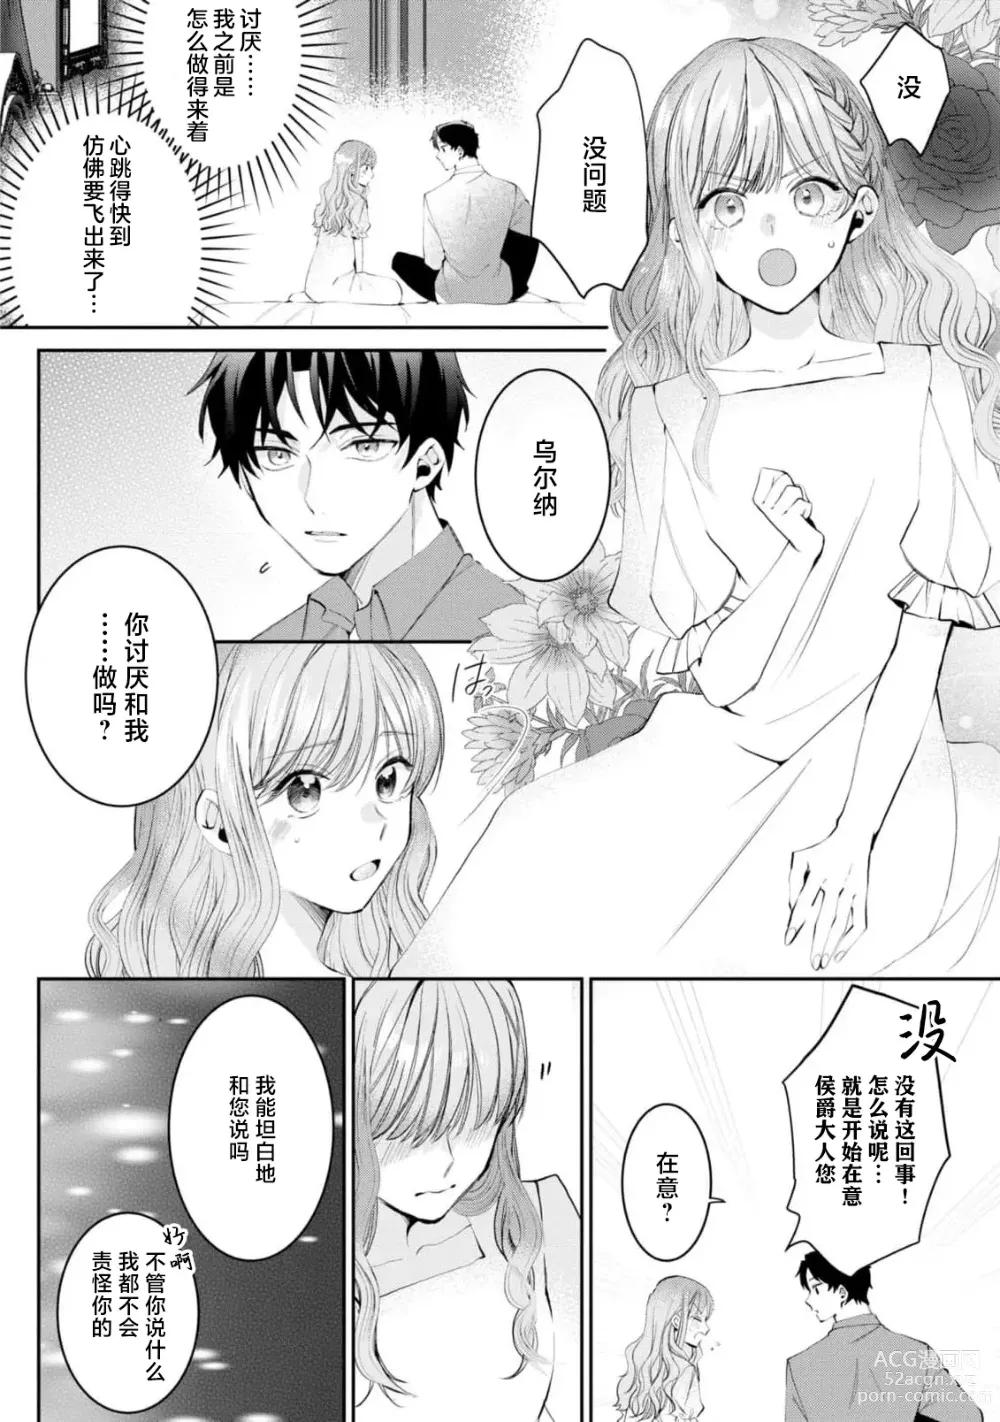 Page 24 of manga 侯爵大人被戏称『机器人』直到变成模范丈夫